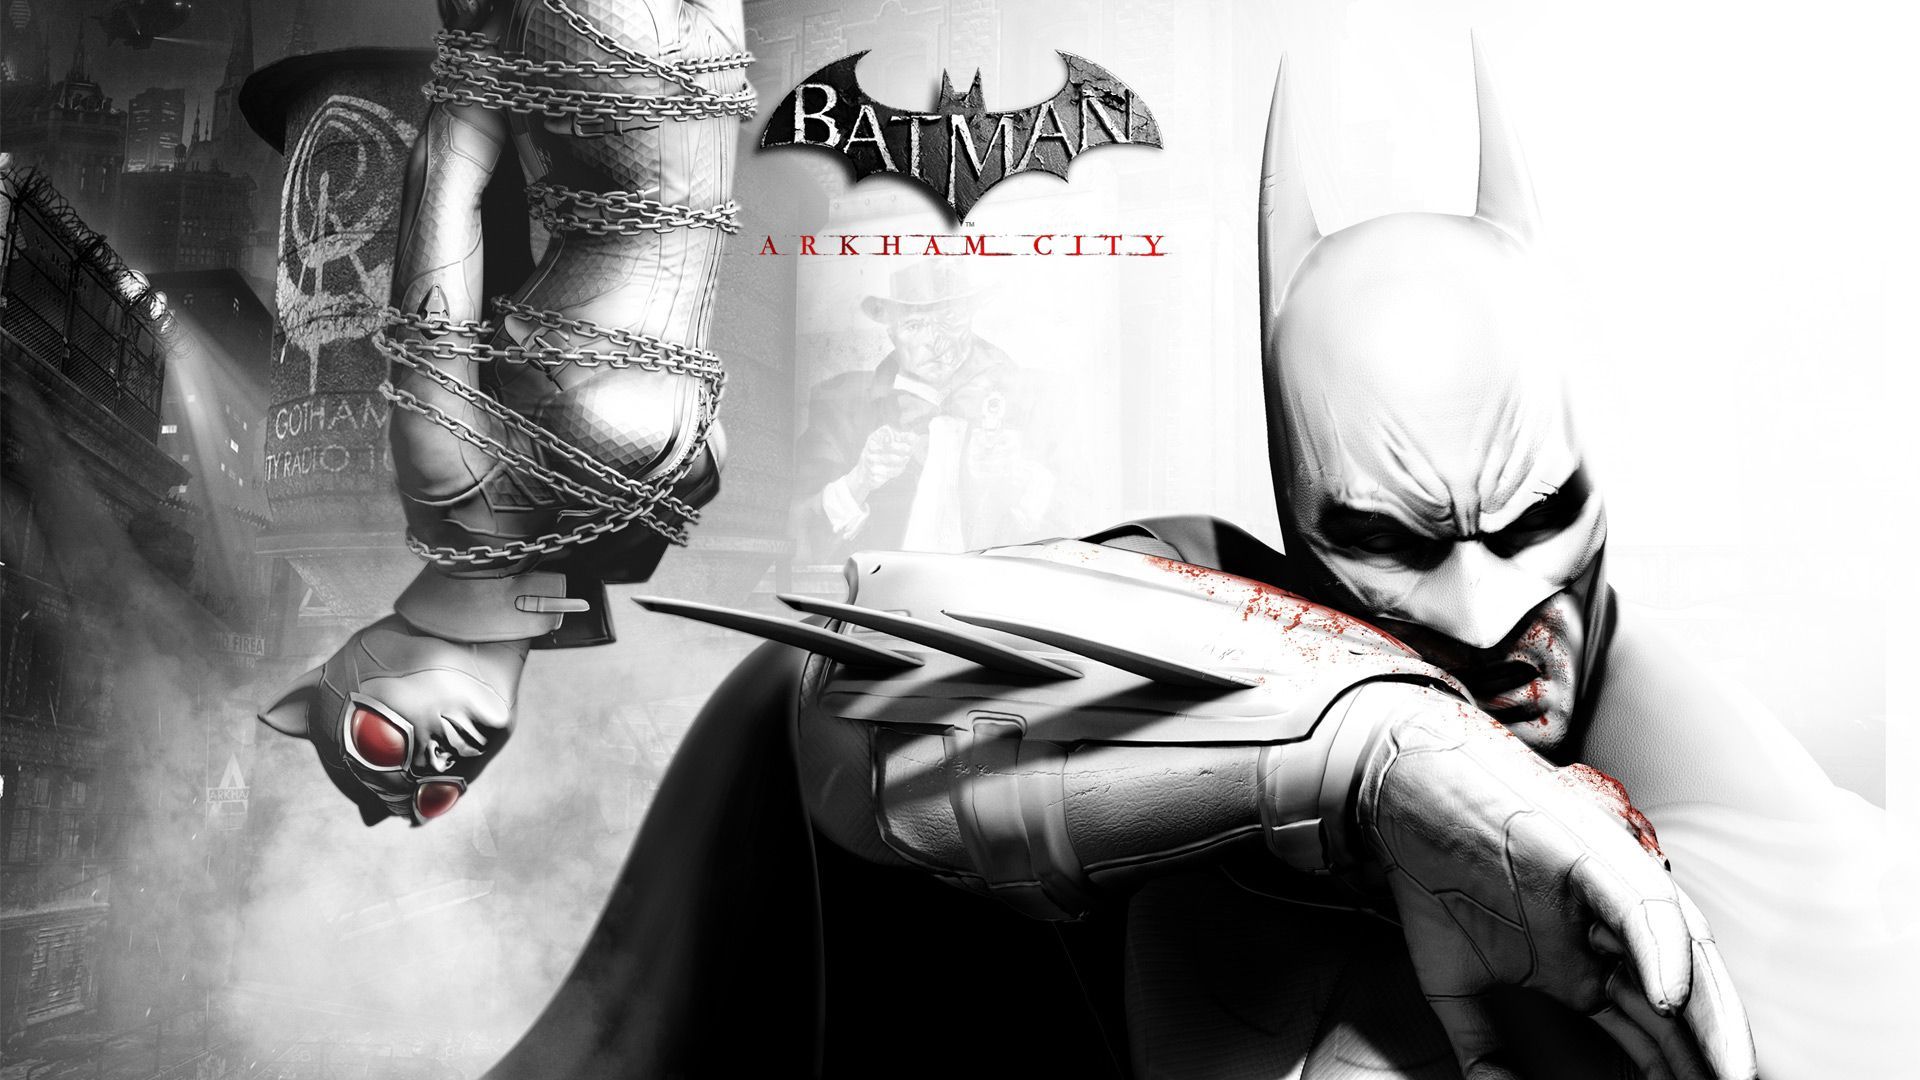 Batman Arkham City Video Game Wallpapers | HD Wallpapers